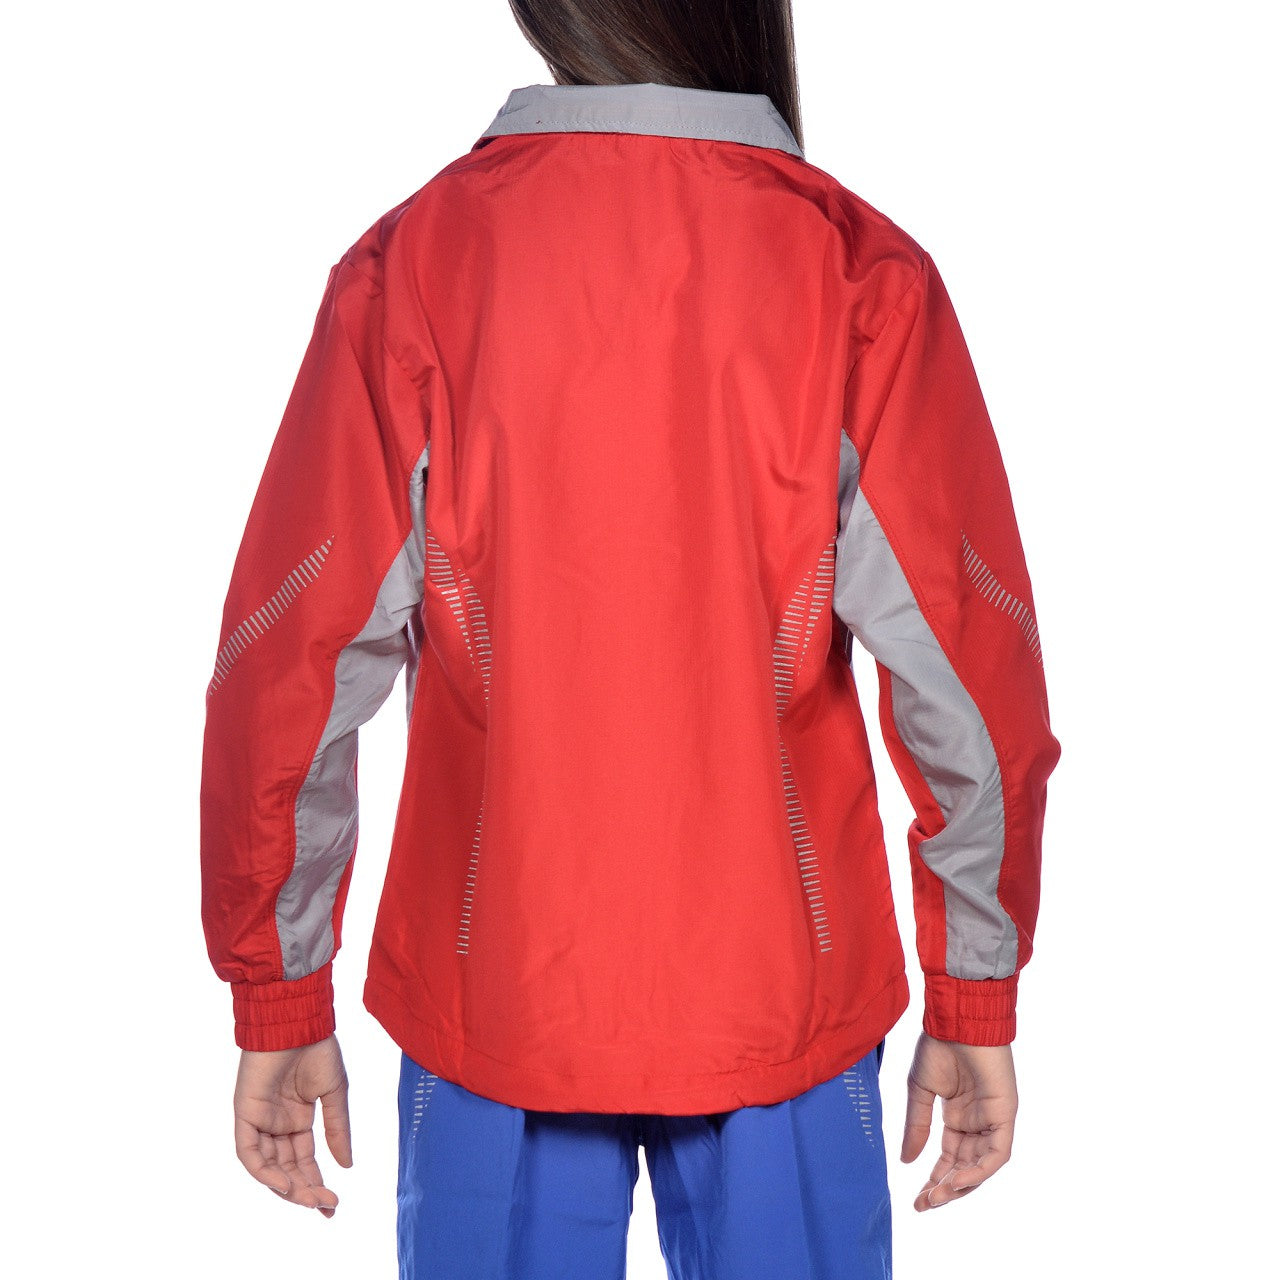 Jr Tl Warm Up Jacket red/grey